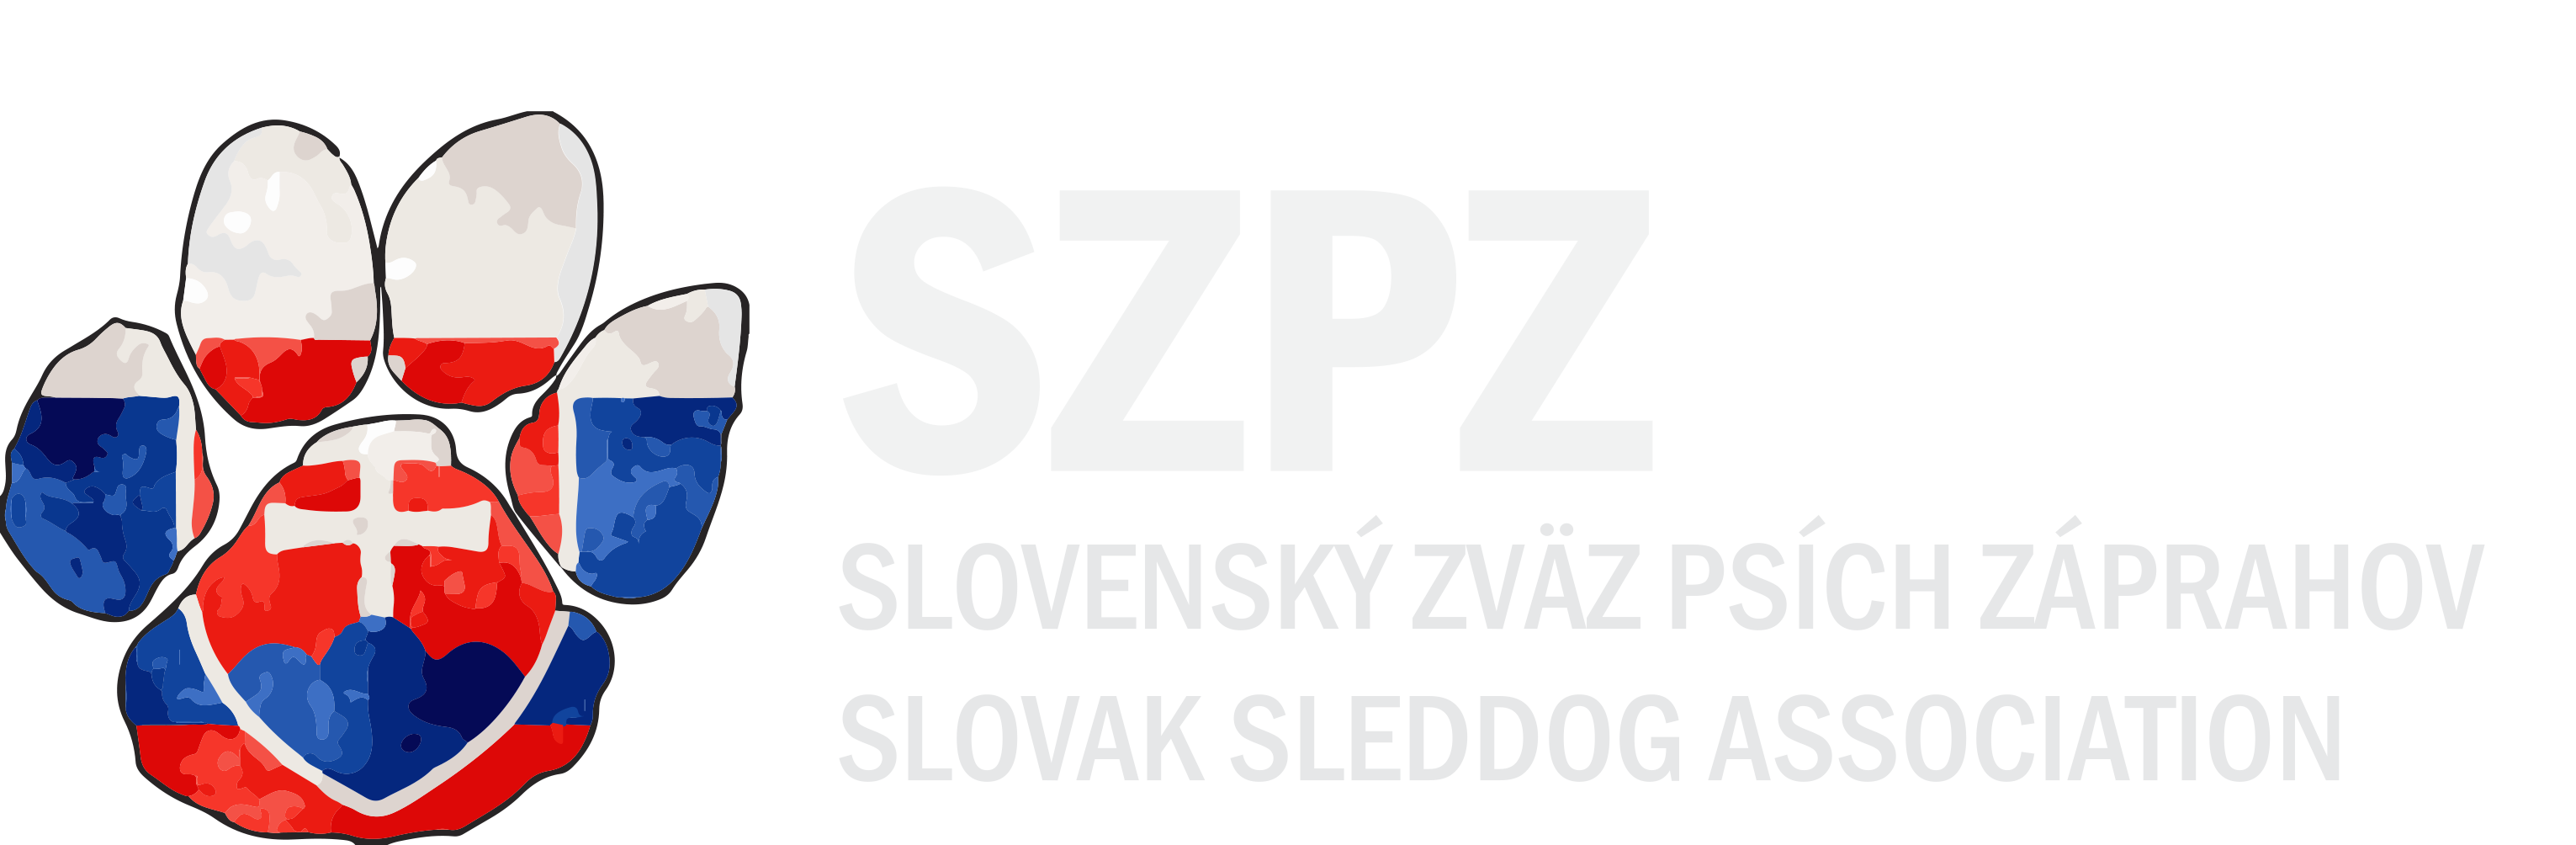 SZPZ logo